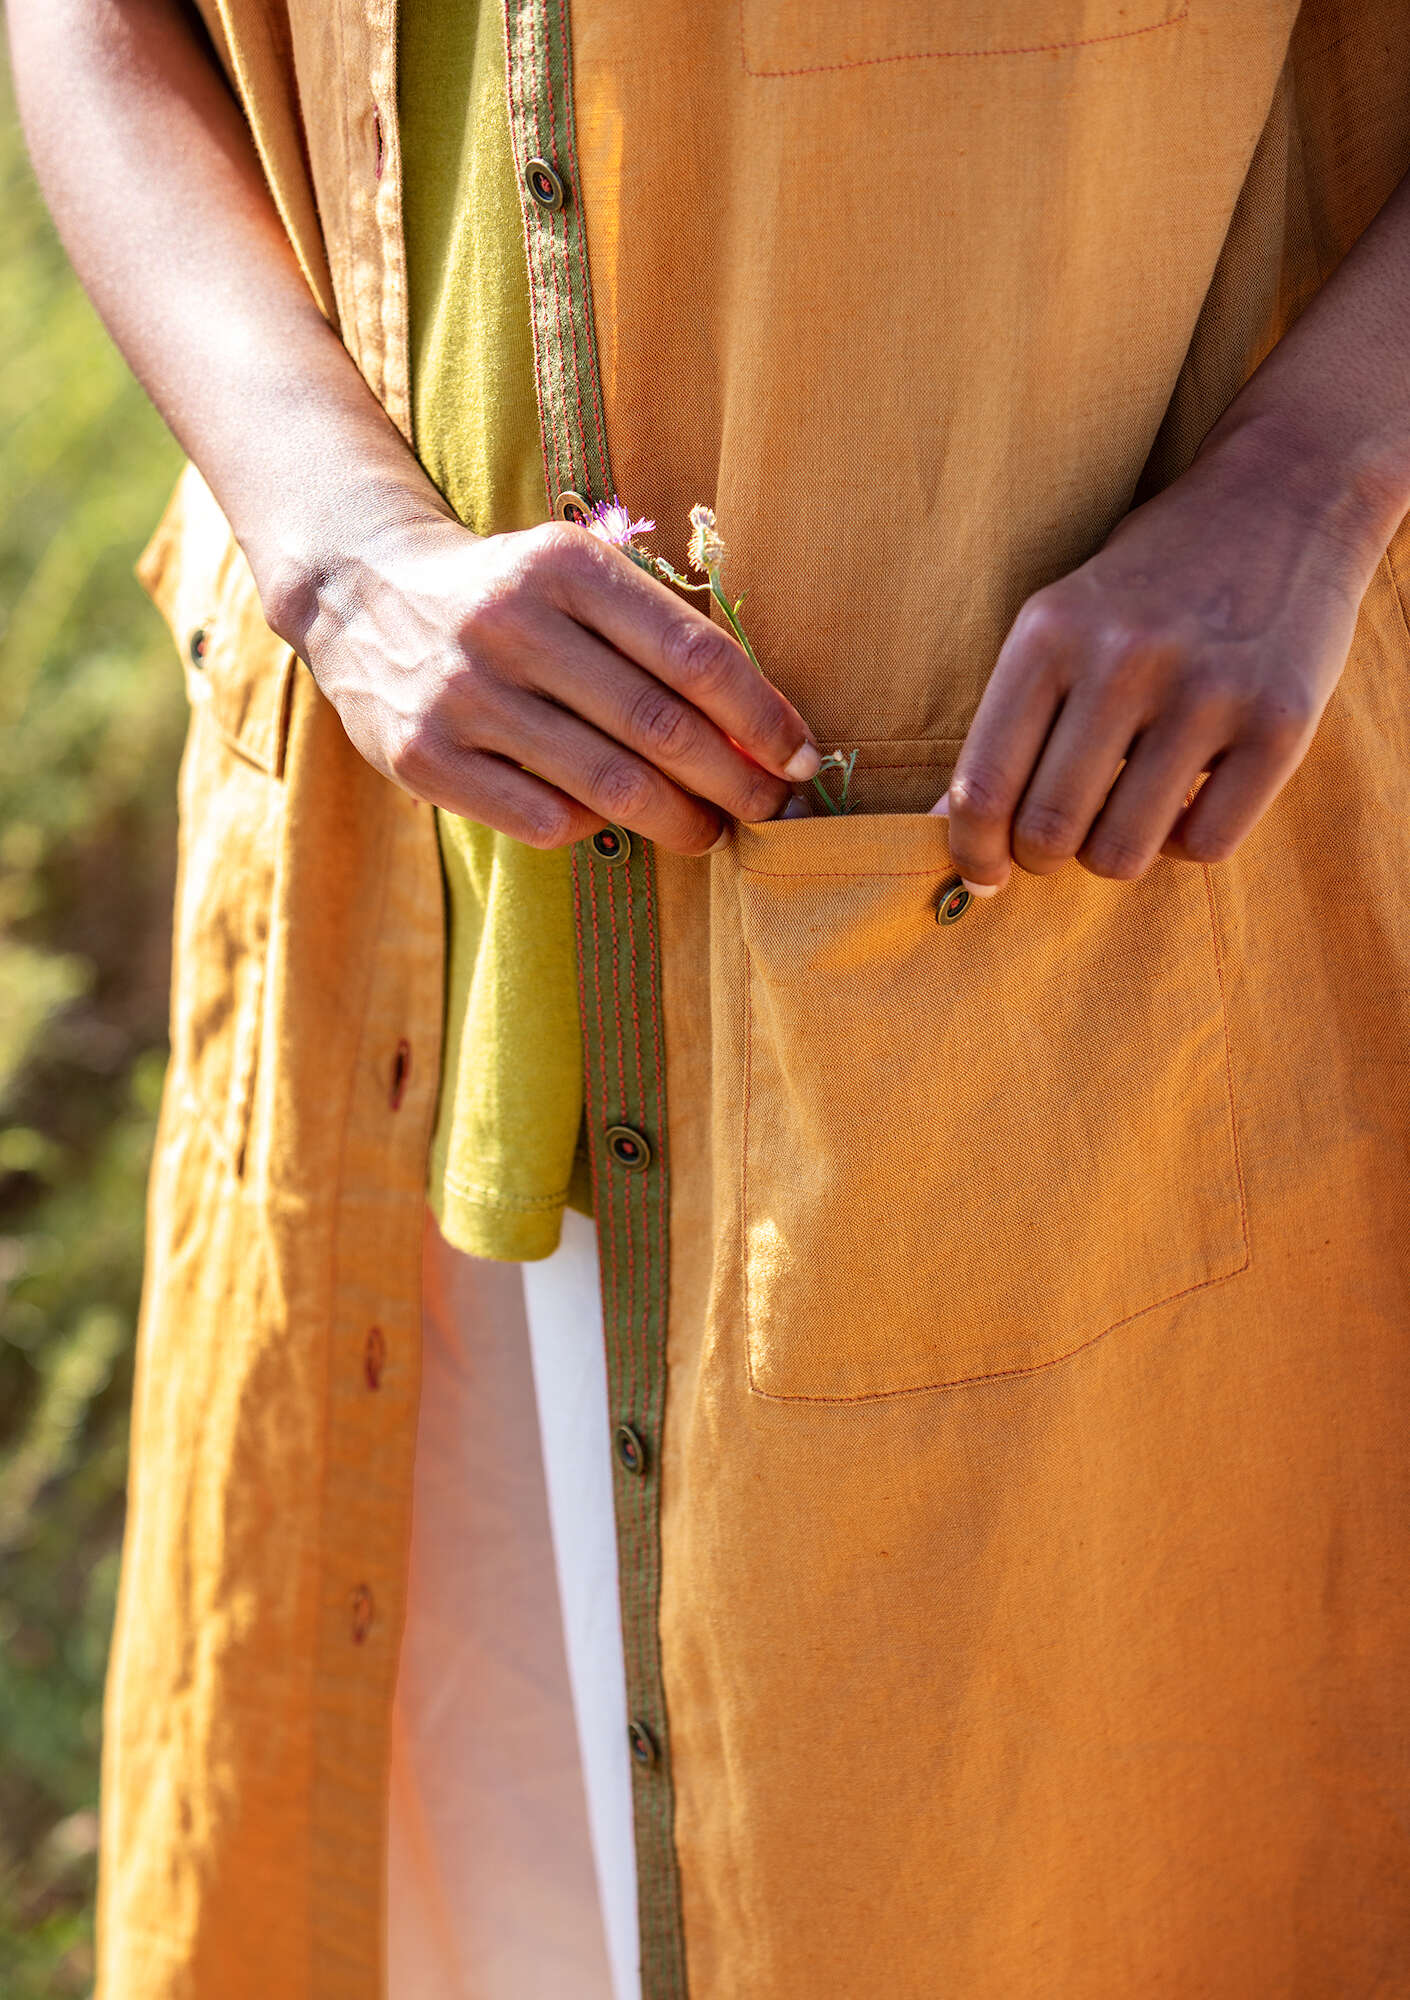 Woven “Safari” dress in organic cotton/linen burnt sienna